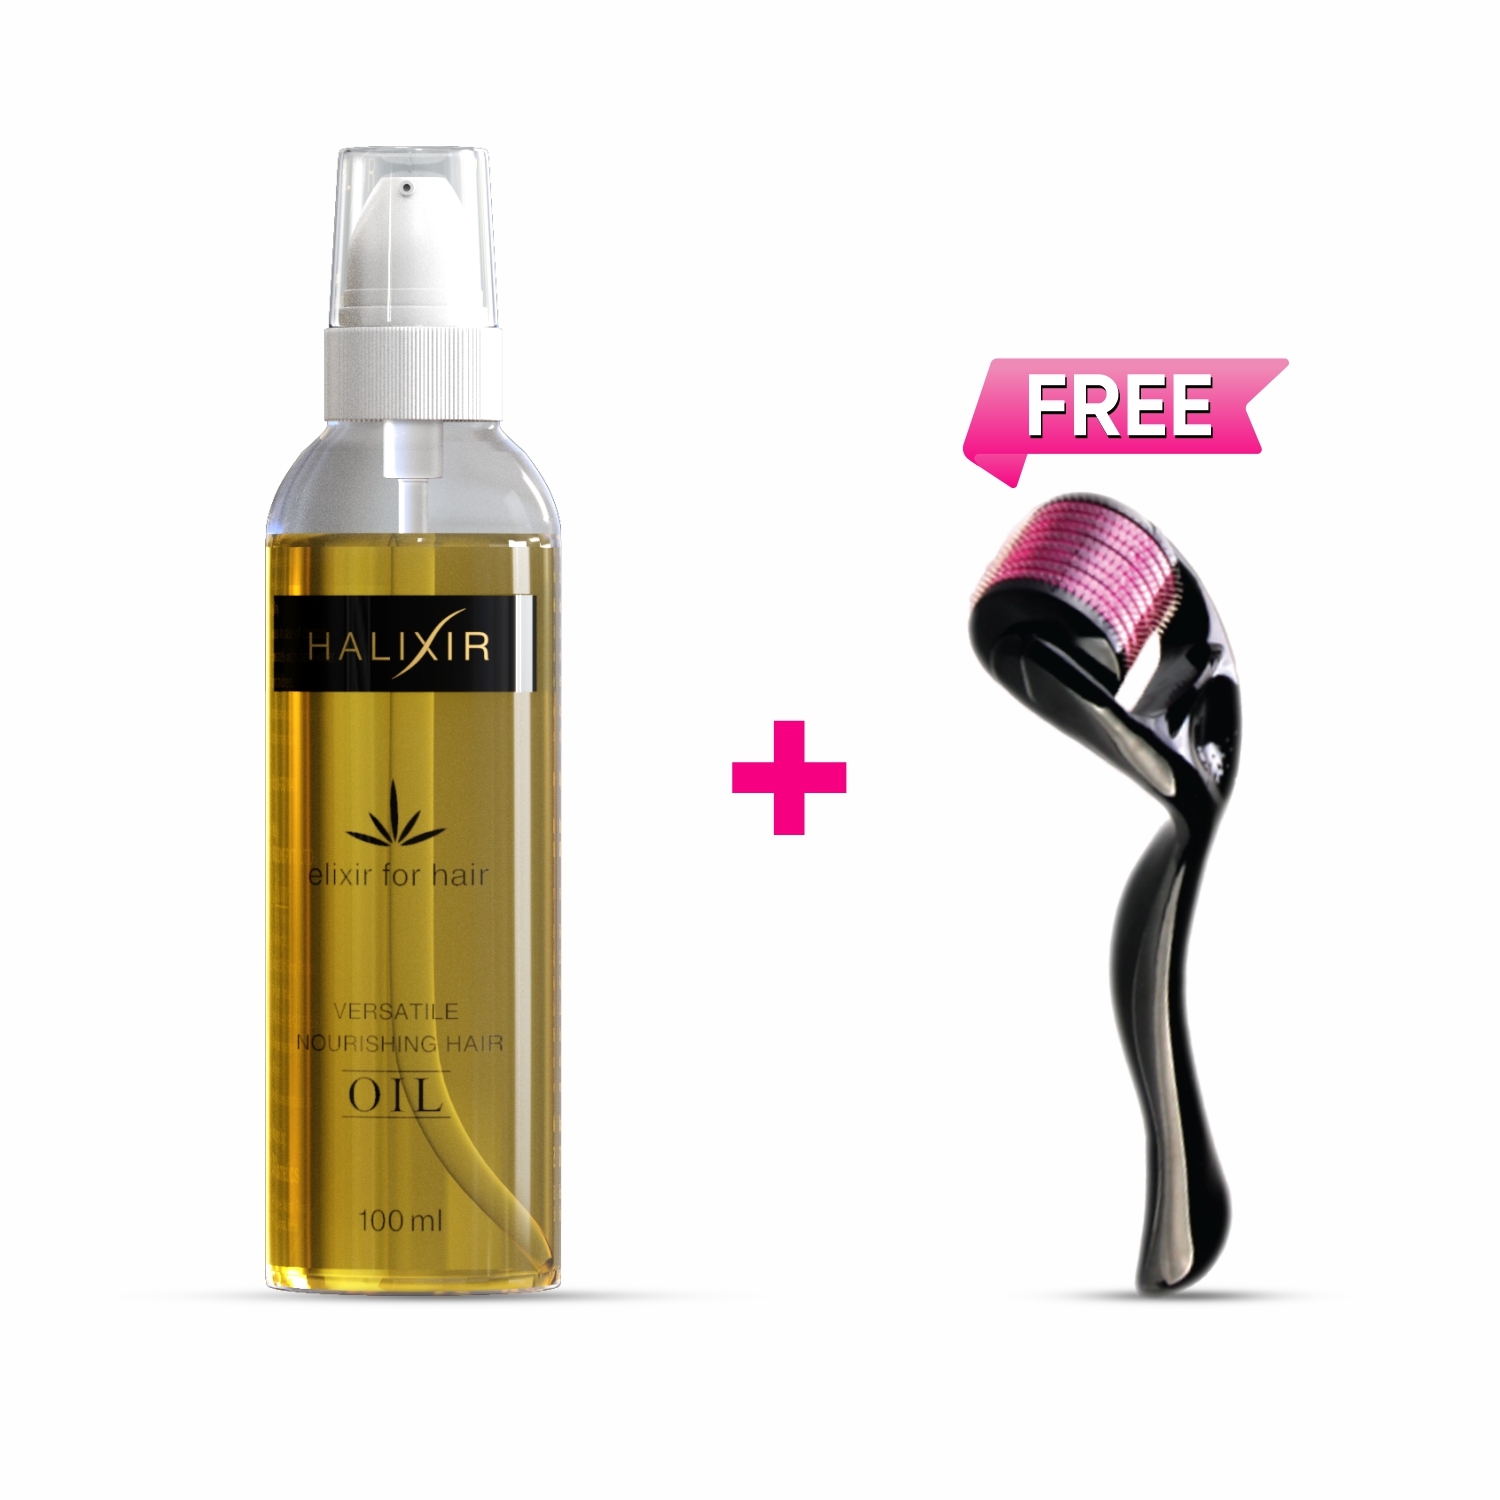 EMM | Halixir Hair Nourishing Oil with Free Derma Roller